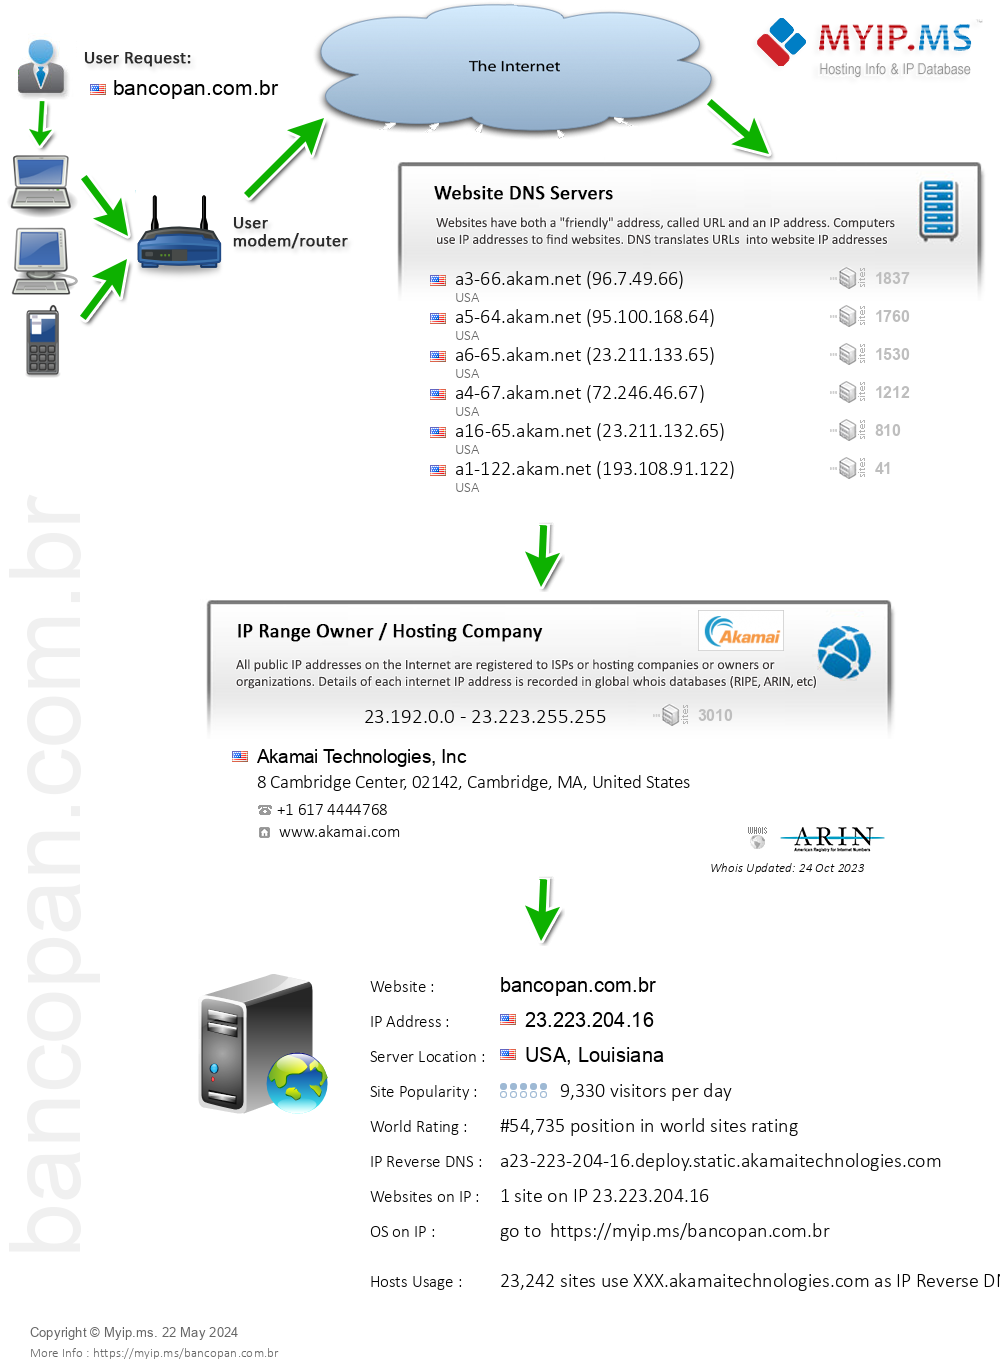 Bancopan.com.br - Website Hosting Visual IP Diagram